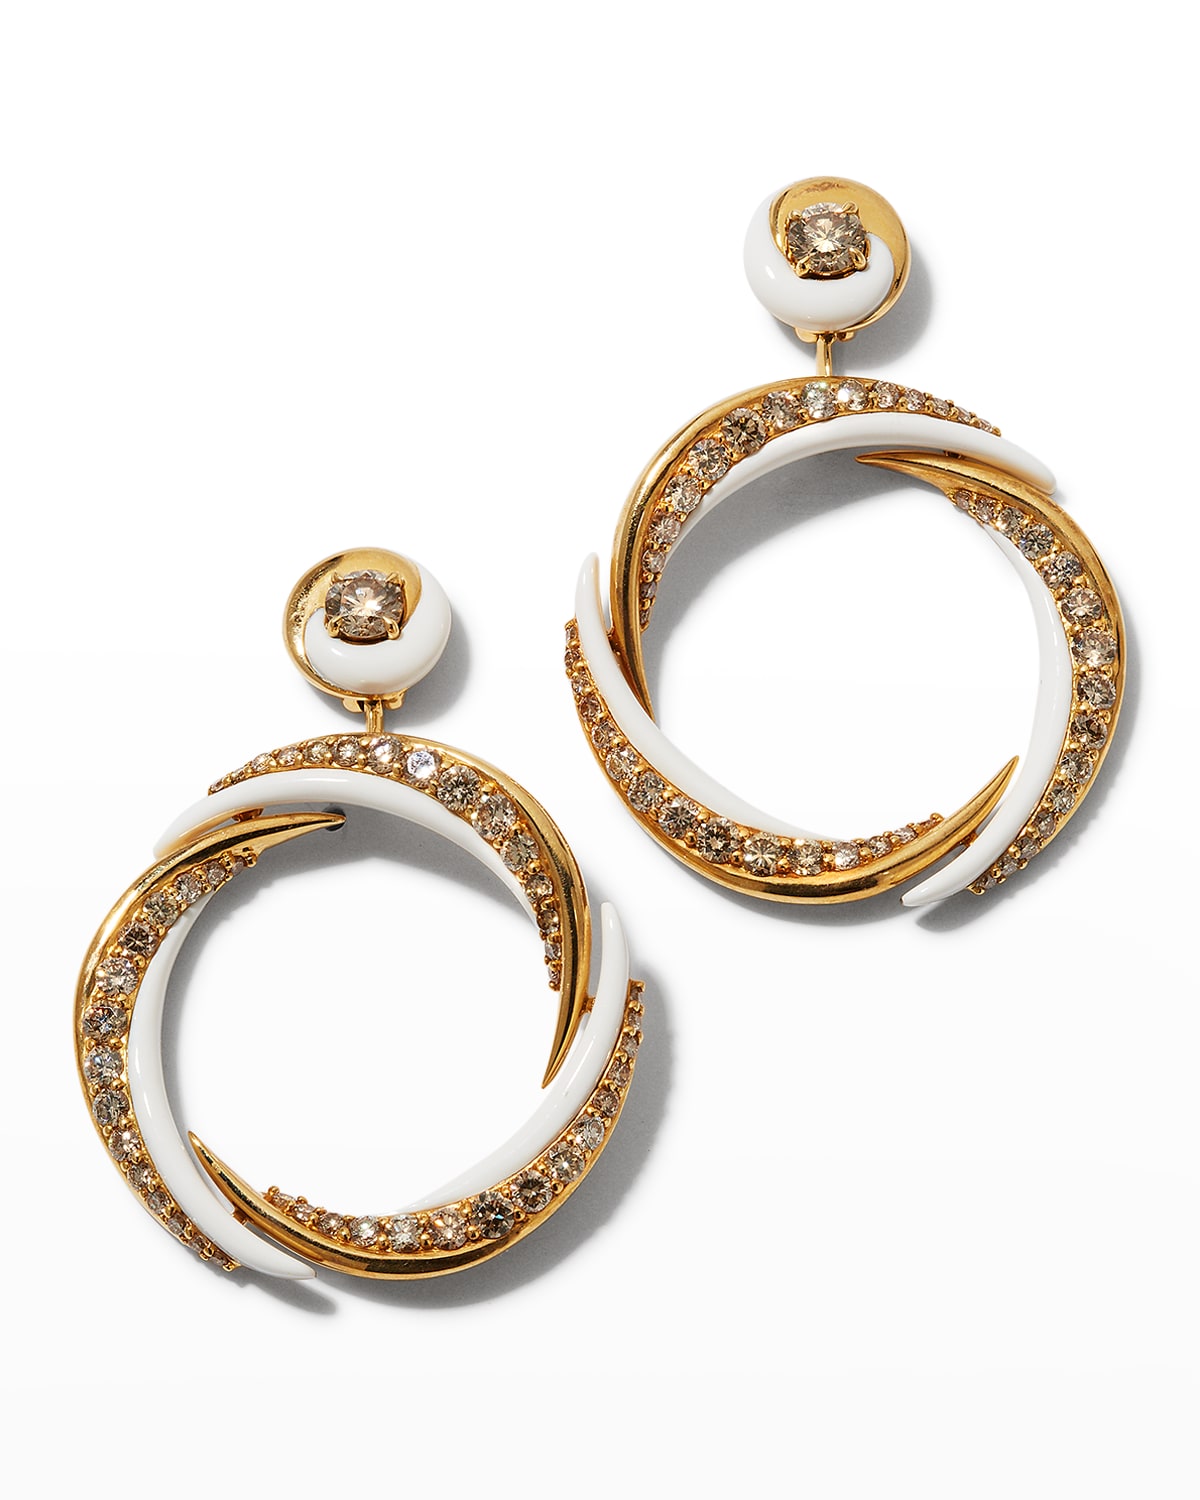 Etho Maria 18K Yellow Gold Brown Diamond and White Enamel Earrings